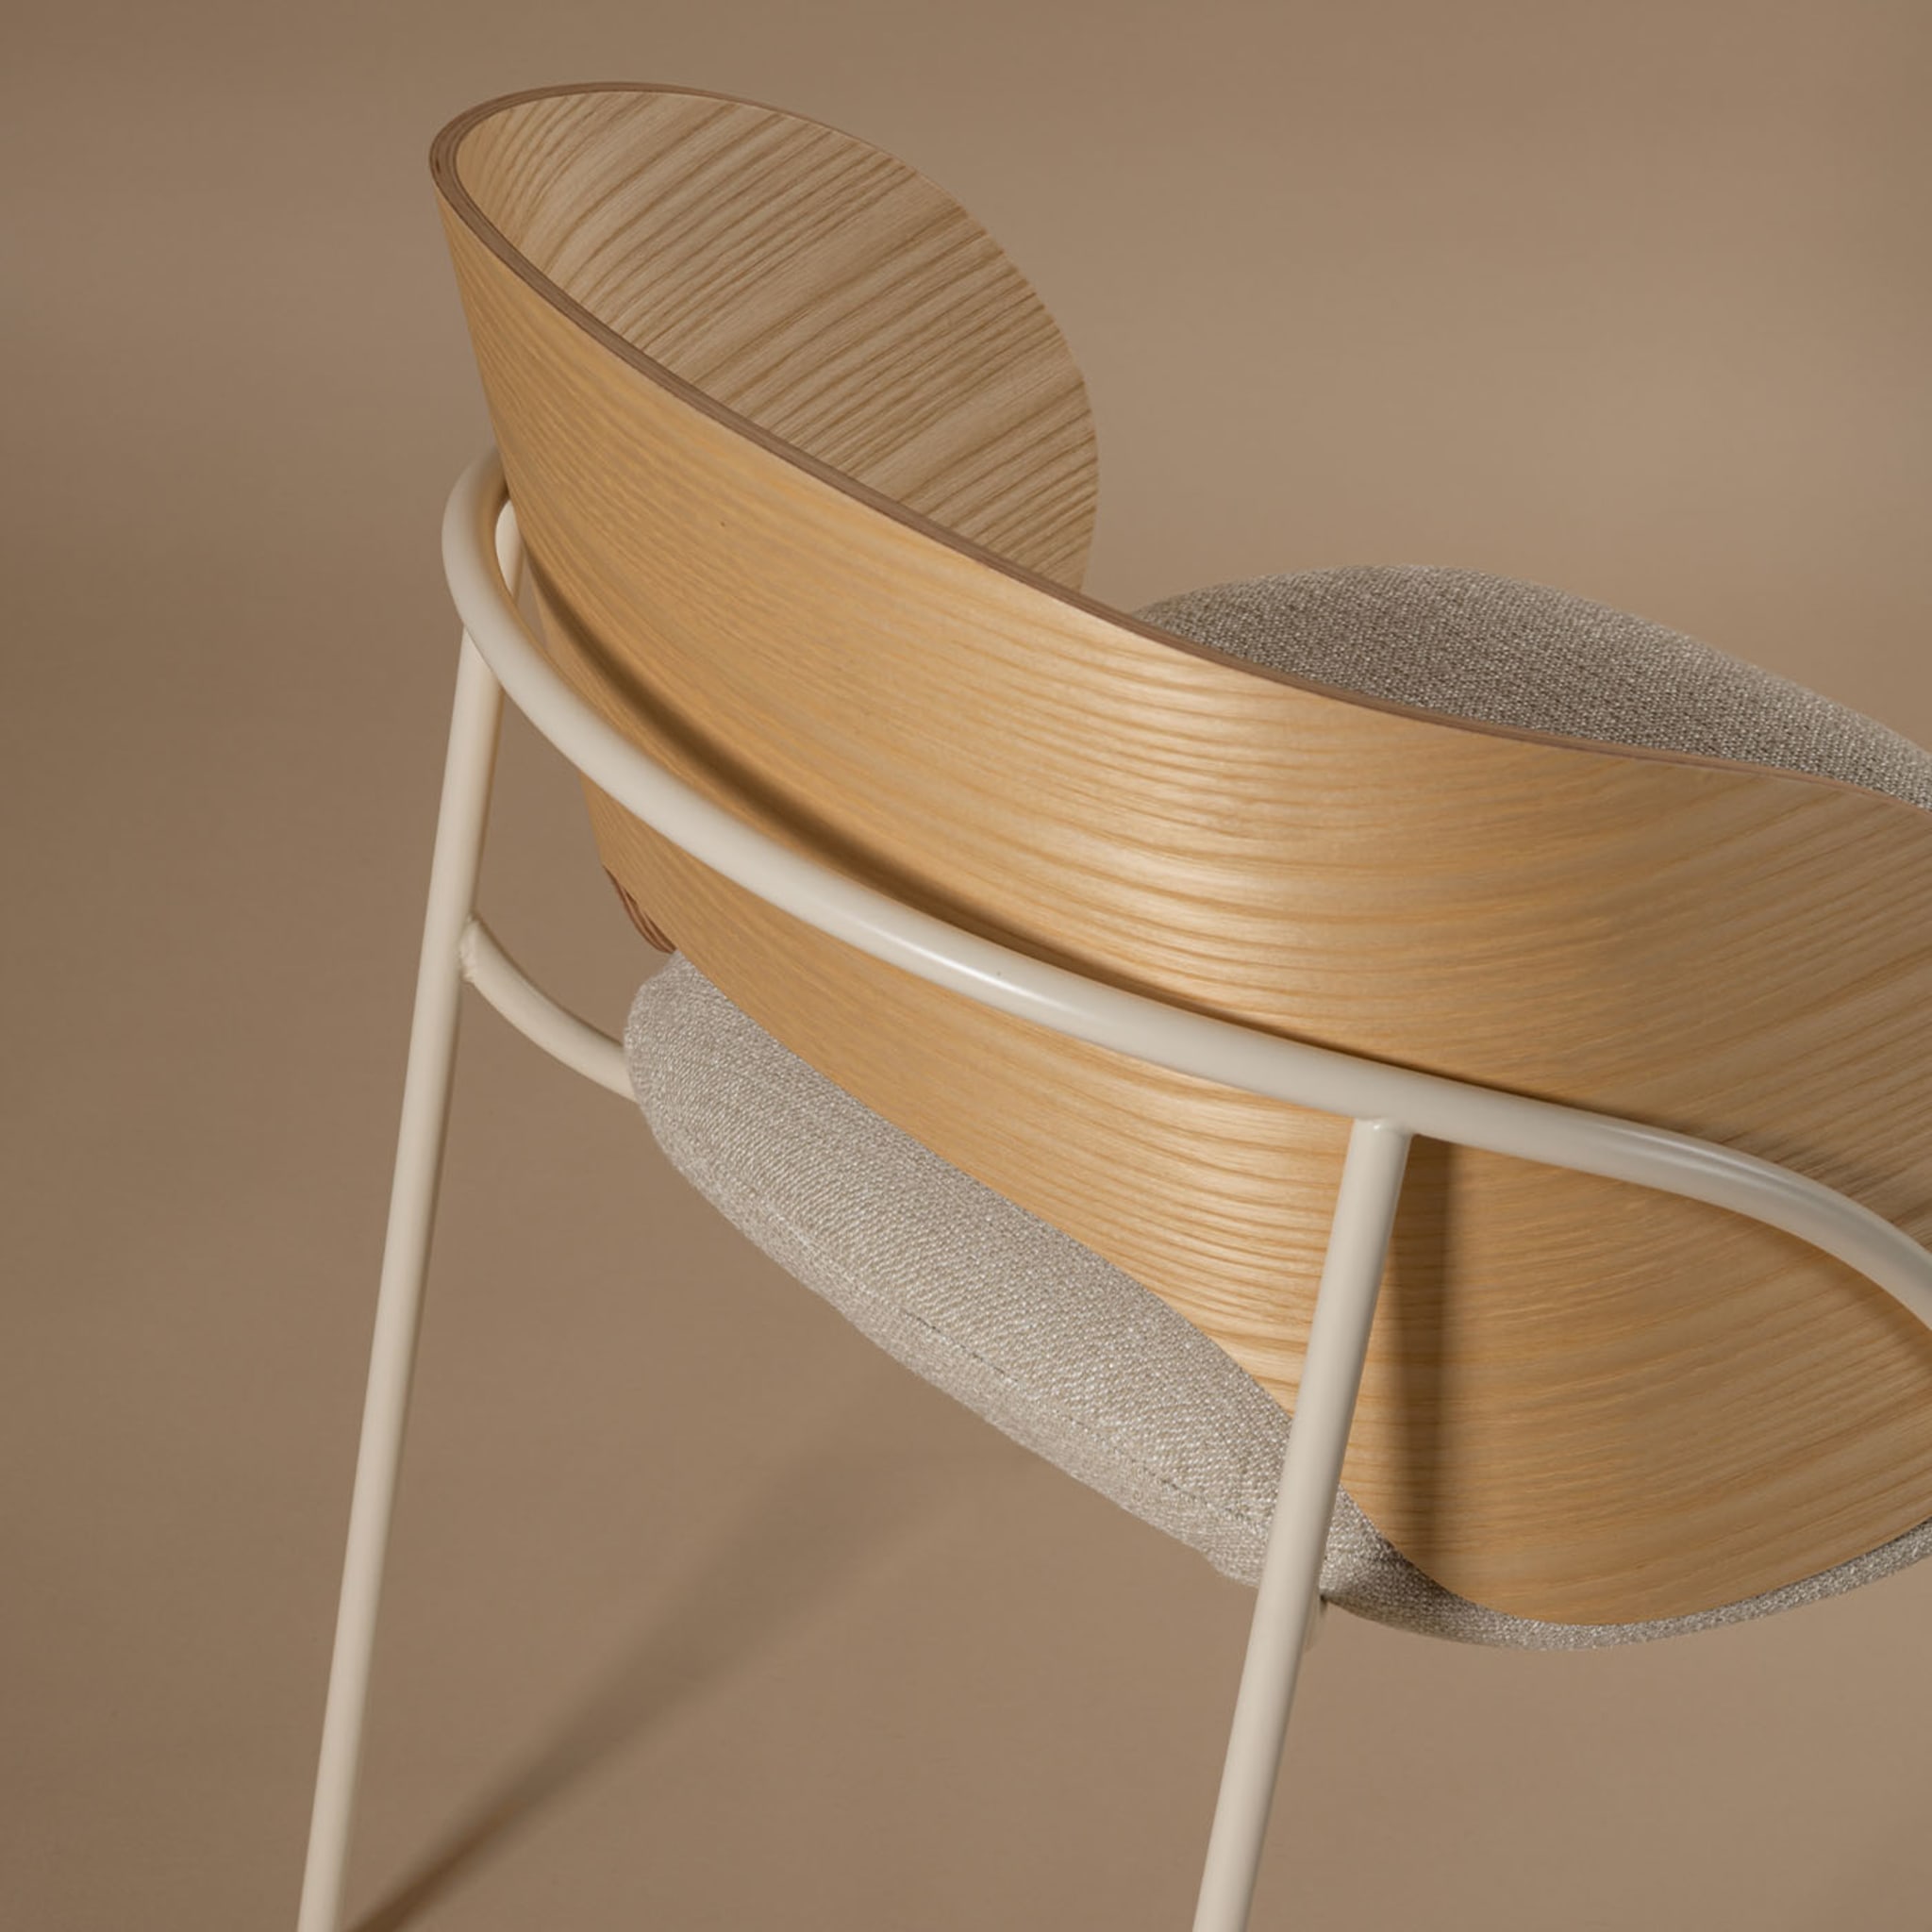 Hagu Chair by Ed Ng, AB Concept - Alternative view 2